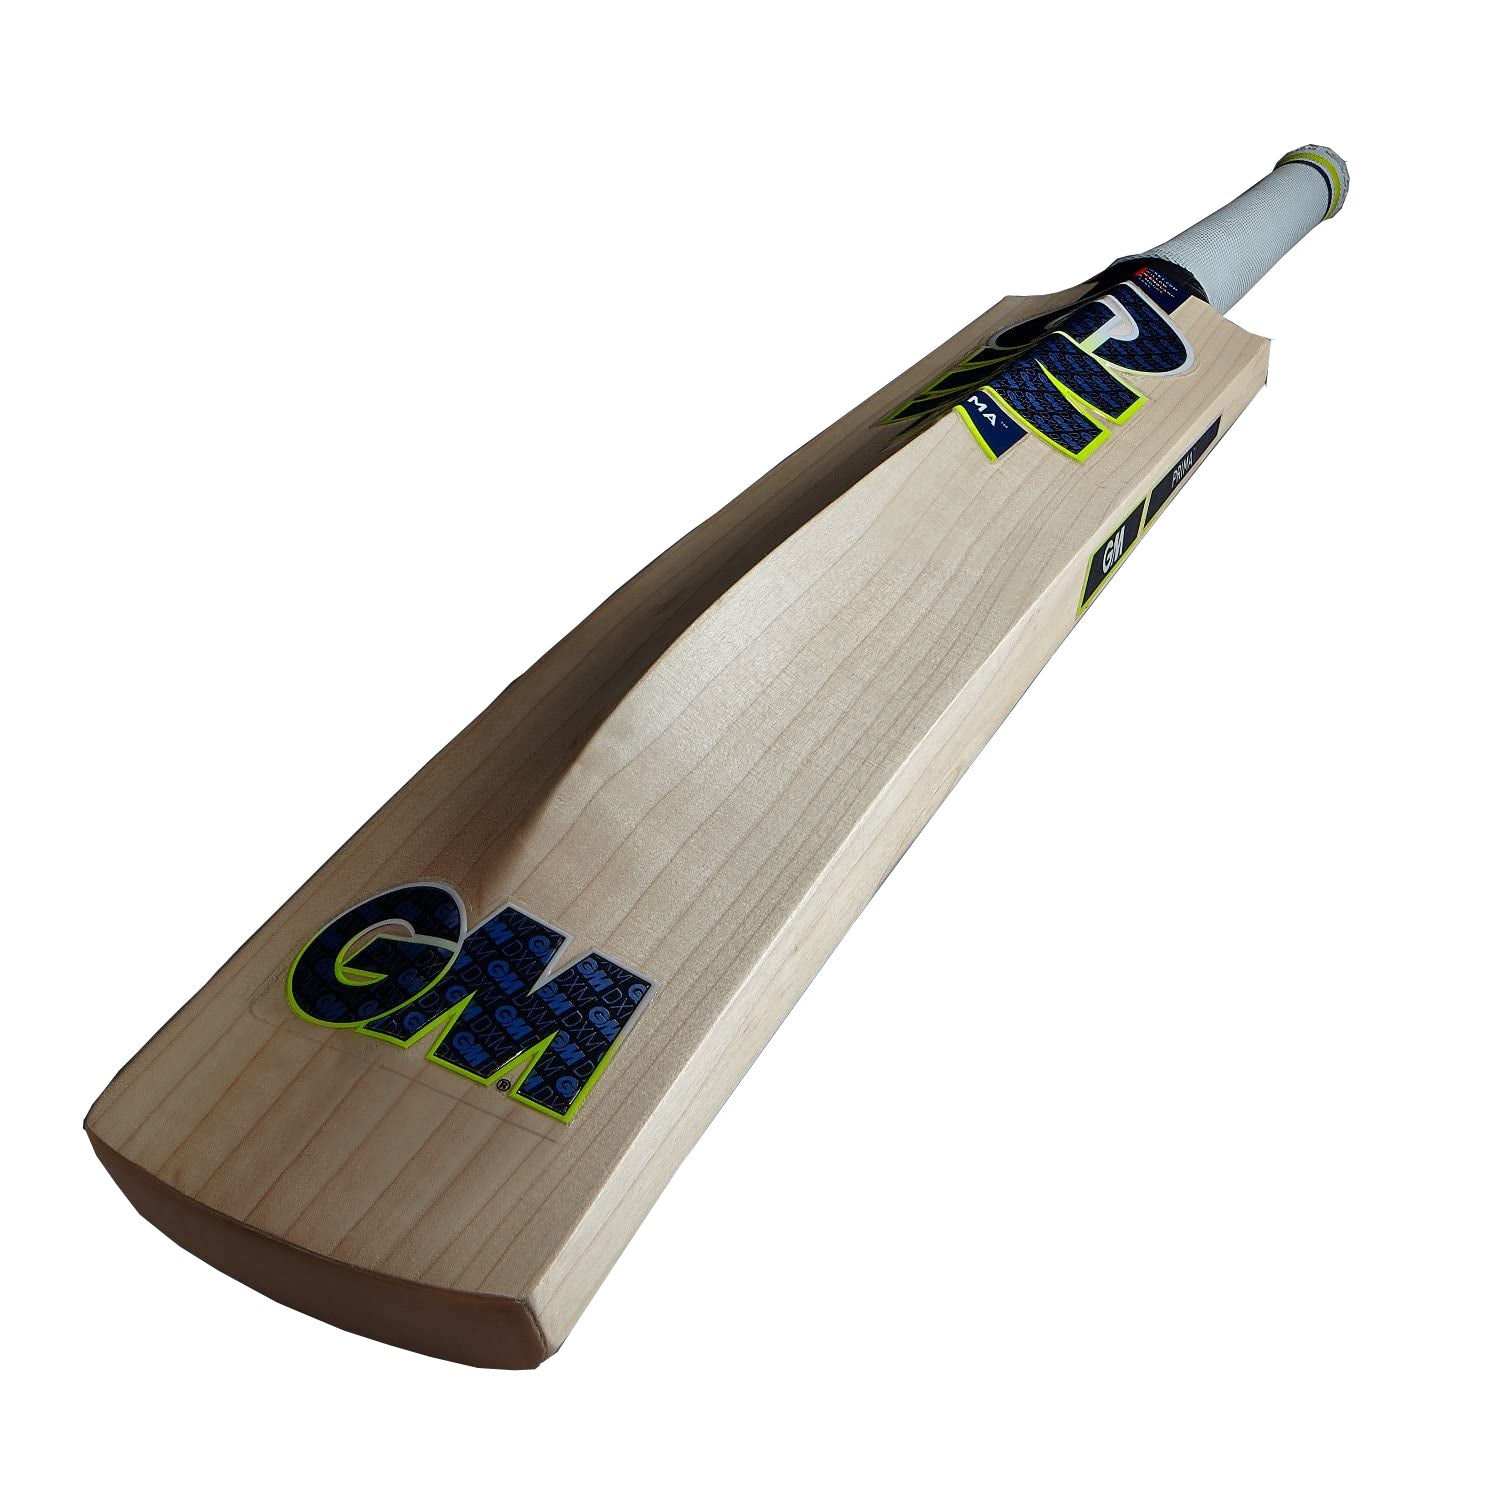 GM Prima 909 English Willow Cricket Bat - Best Price online Prokicksports.com